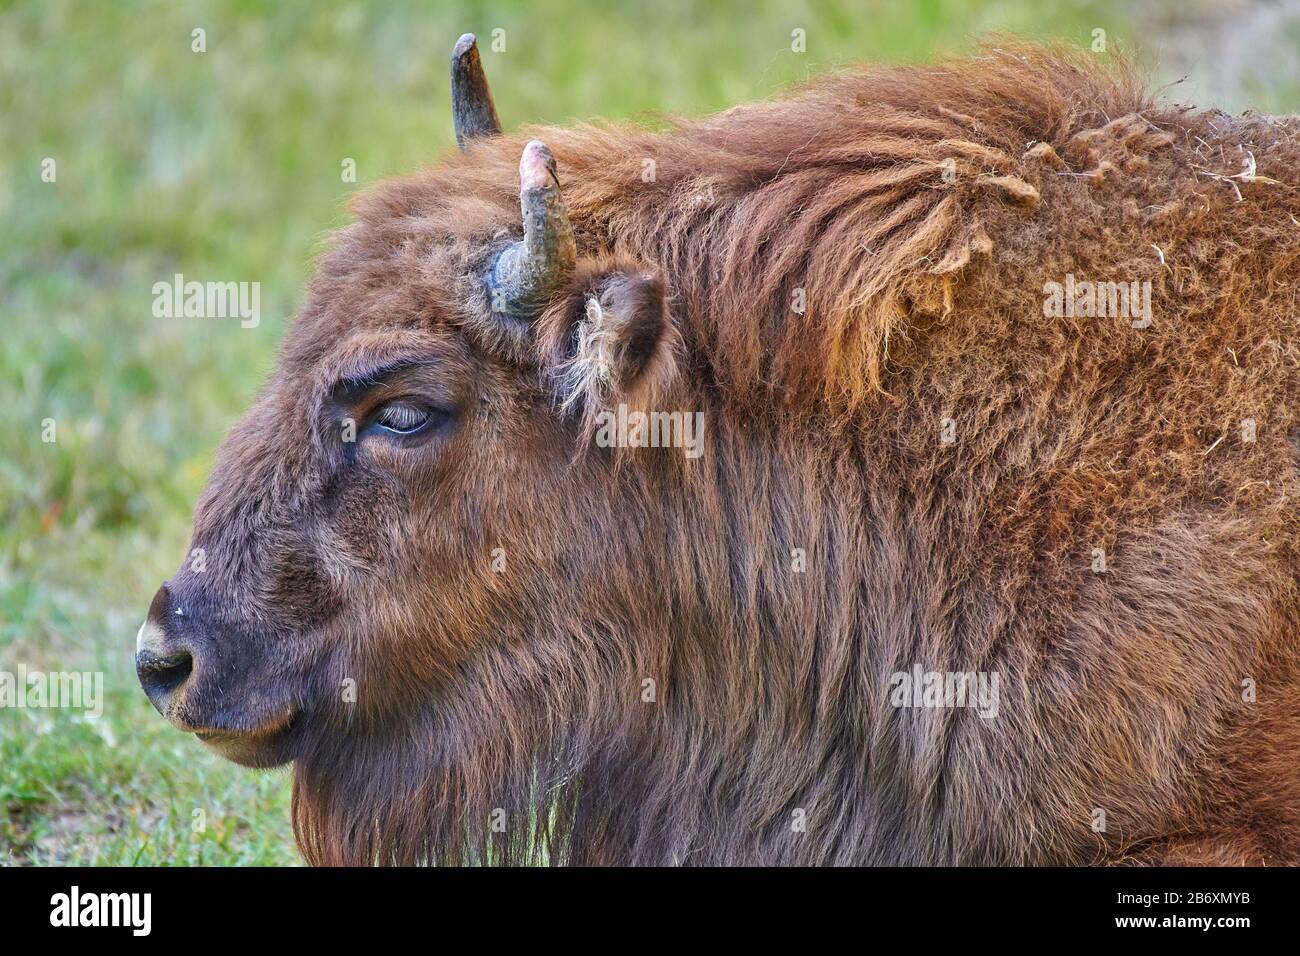 Bisonte europeo, wisent, bisonte europeo del legno, erbivoro Foto Stock